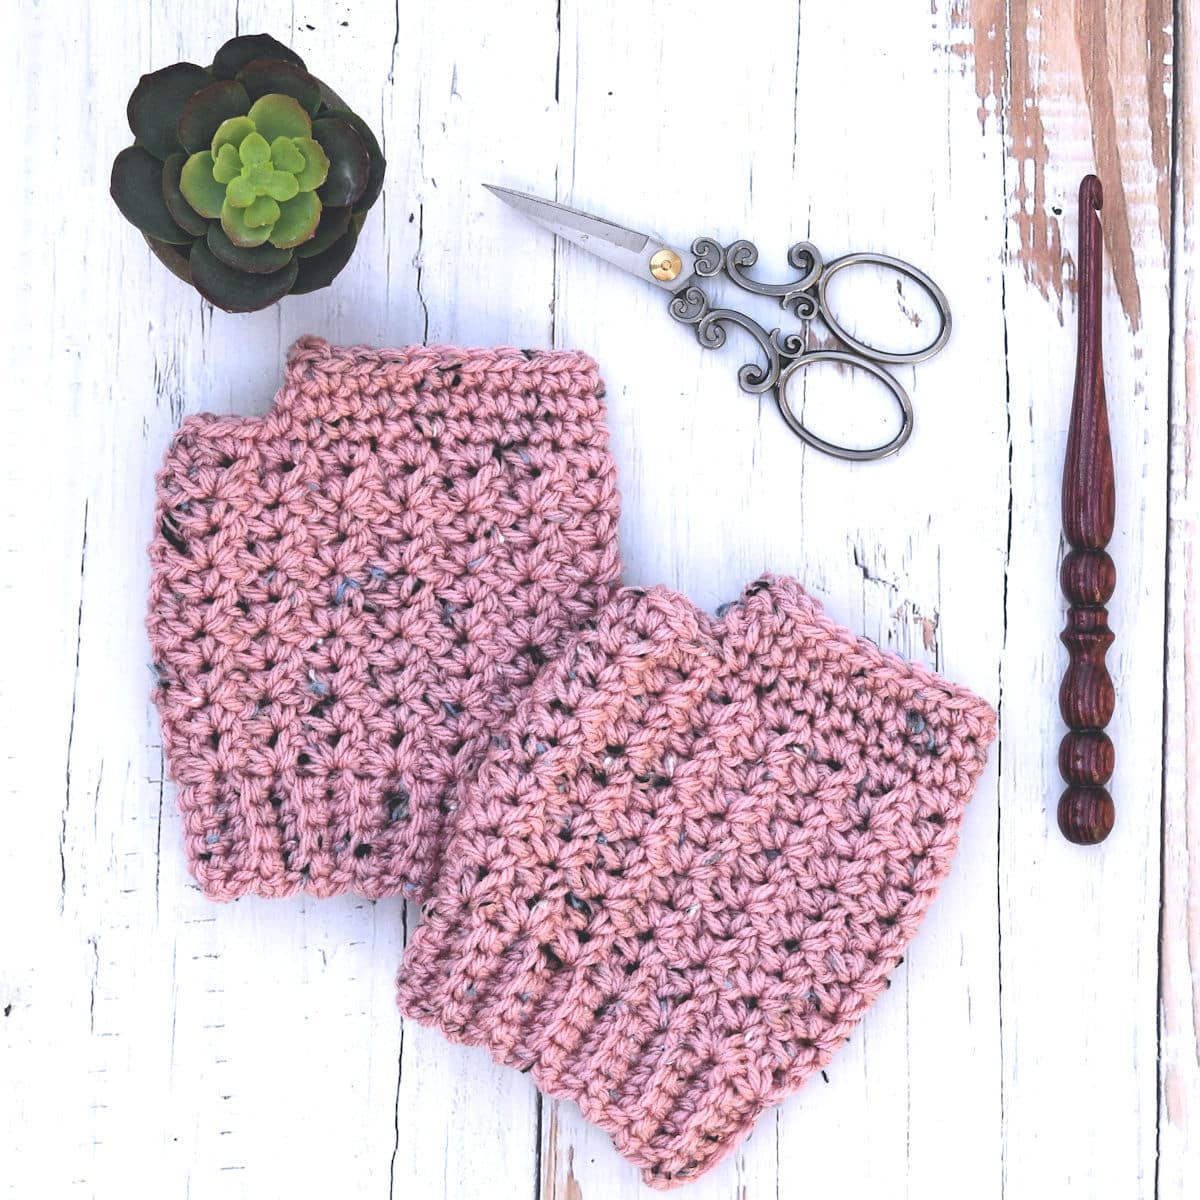 Quick Crochet Fingerless Gloves Pattern from Make It Crochet